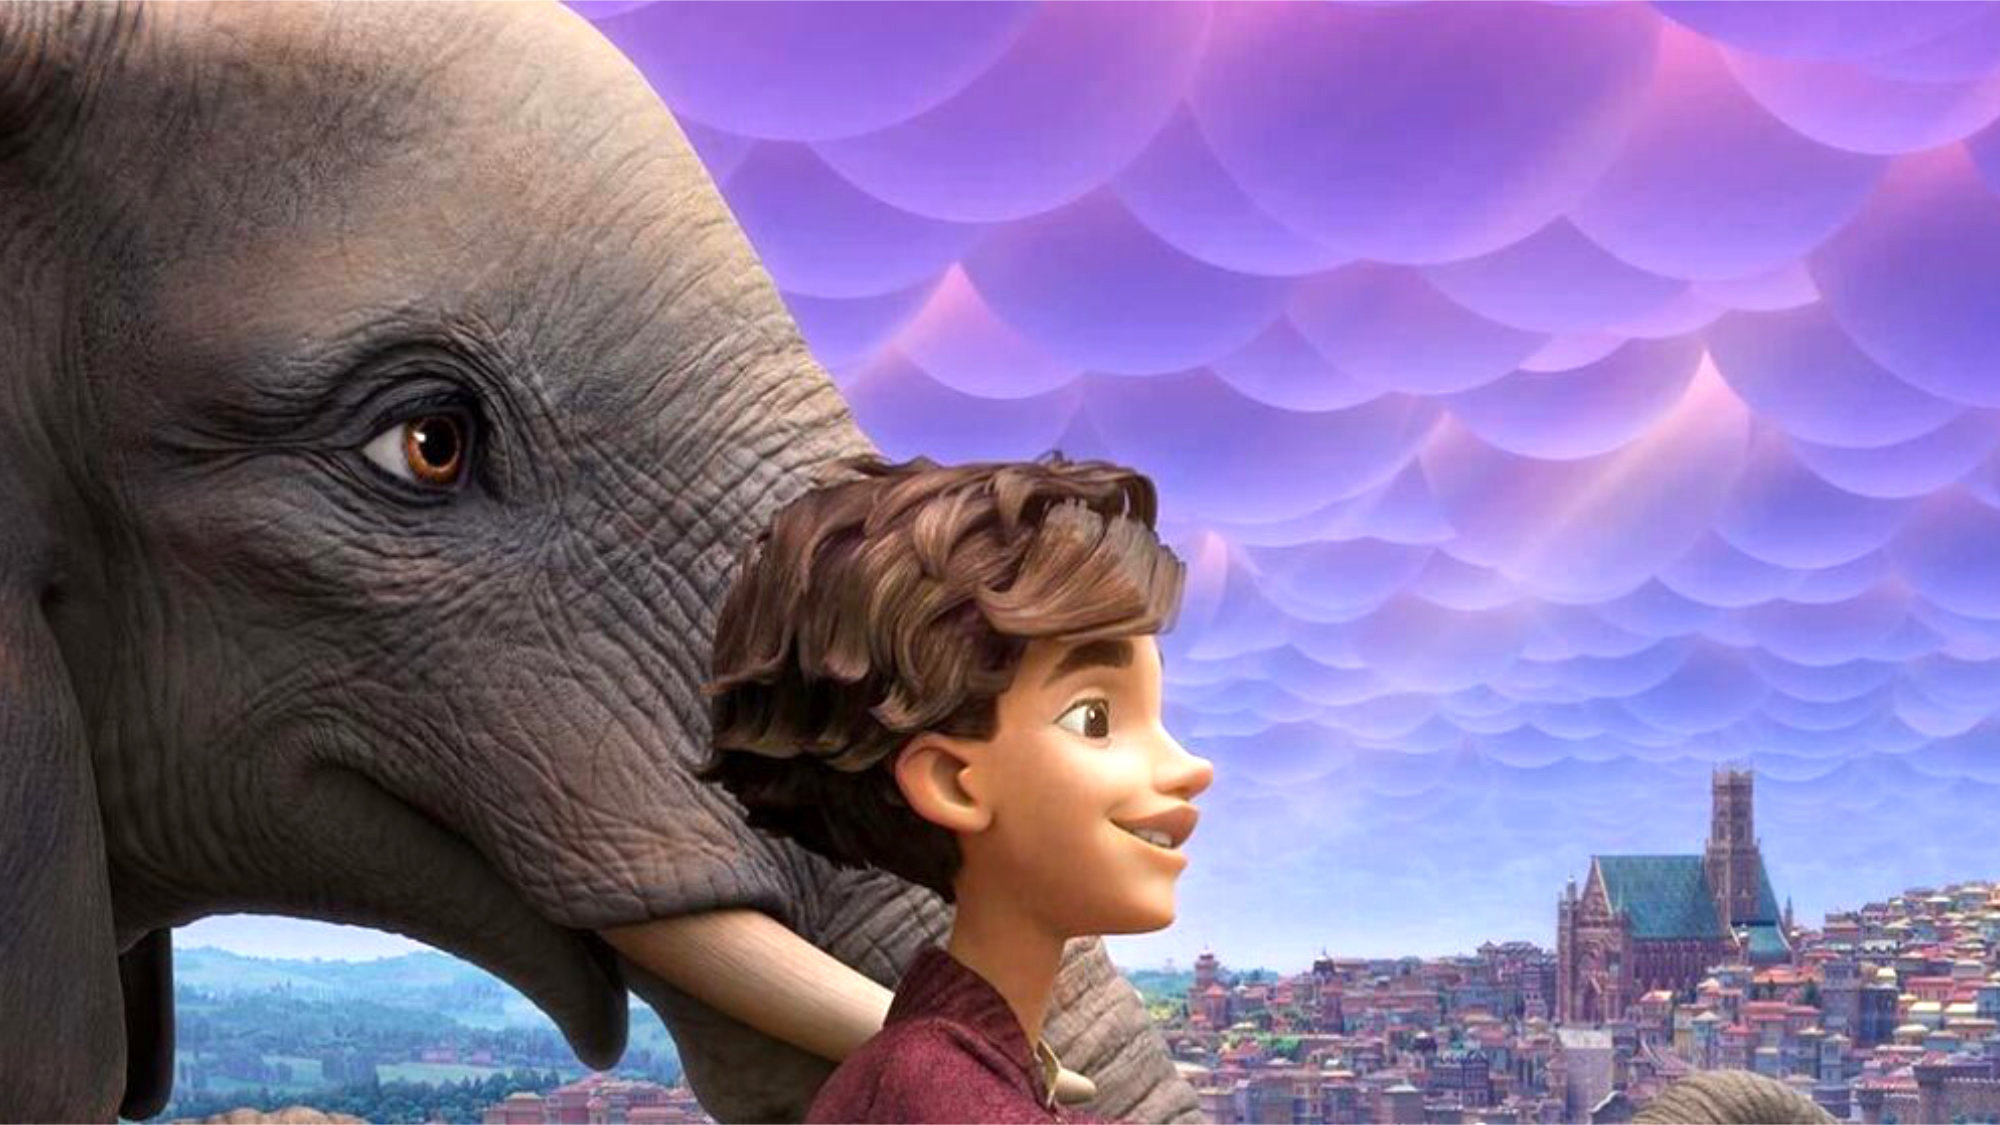 'La elefanta del mago', la historia de esperanza y magia que triunfa en Netflix